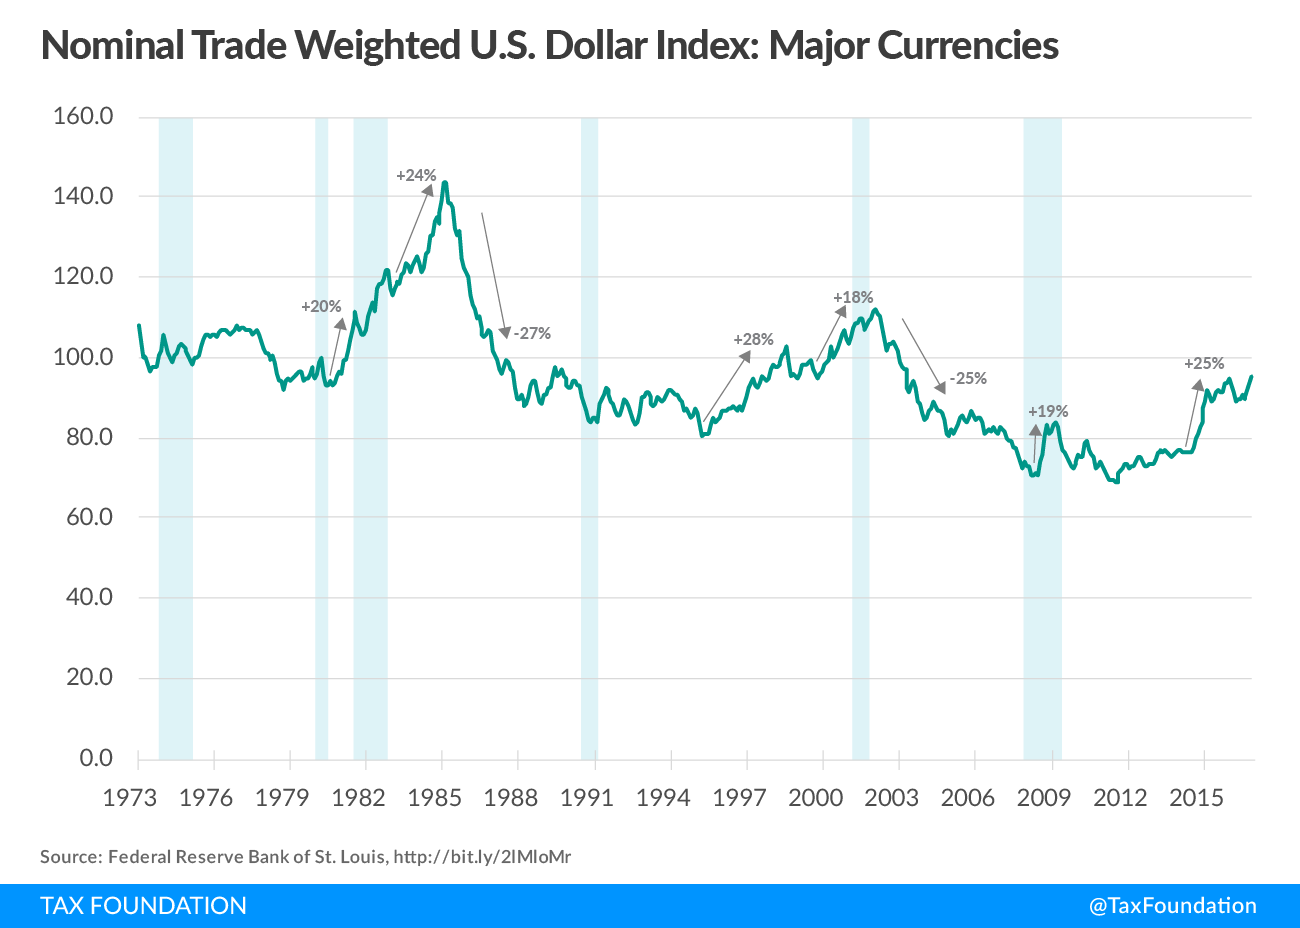 Nominal Trade Weighted U.S. Dollar Index: Major Currencies